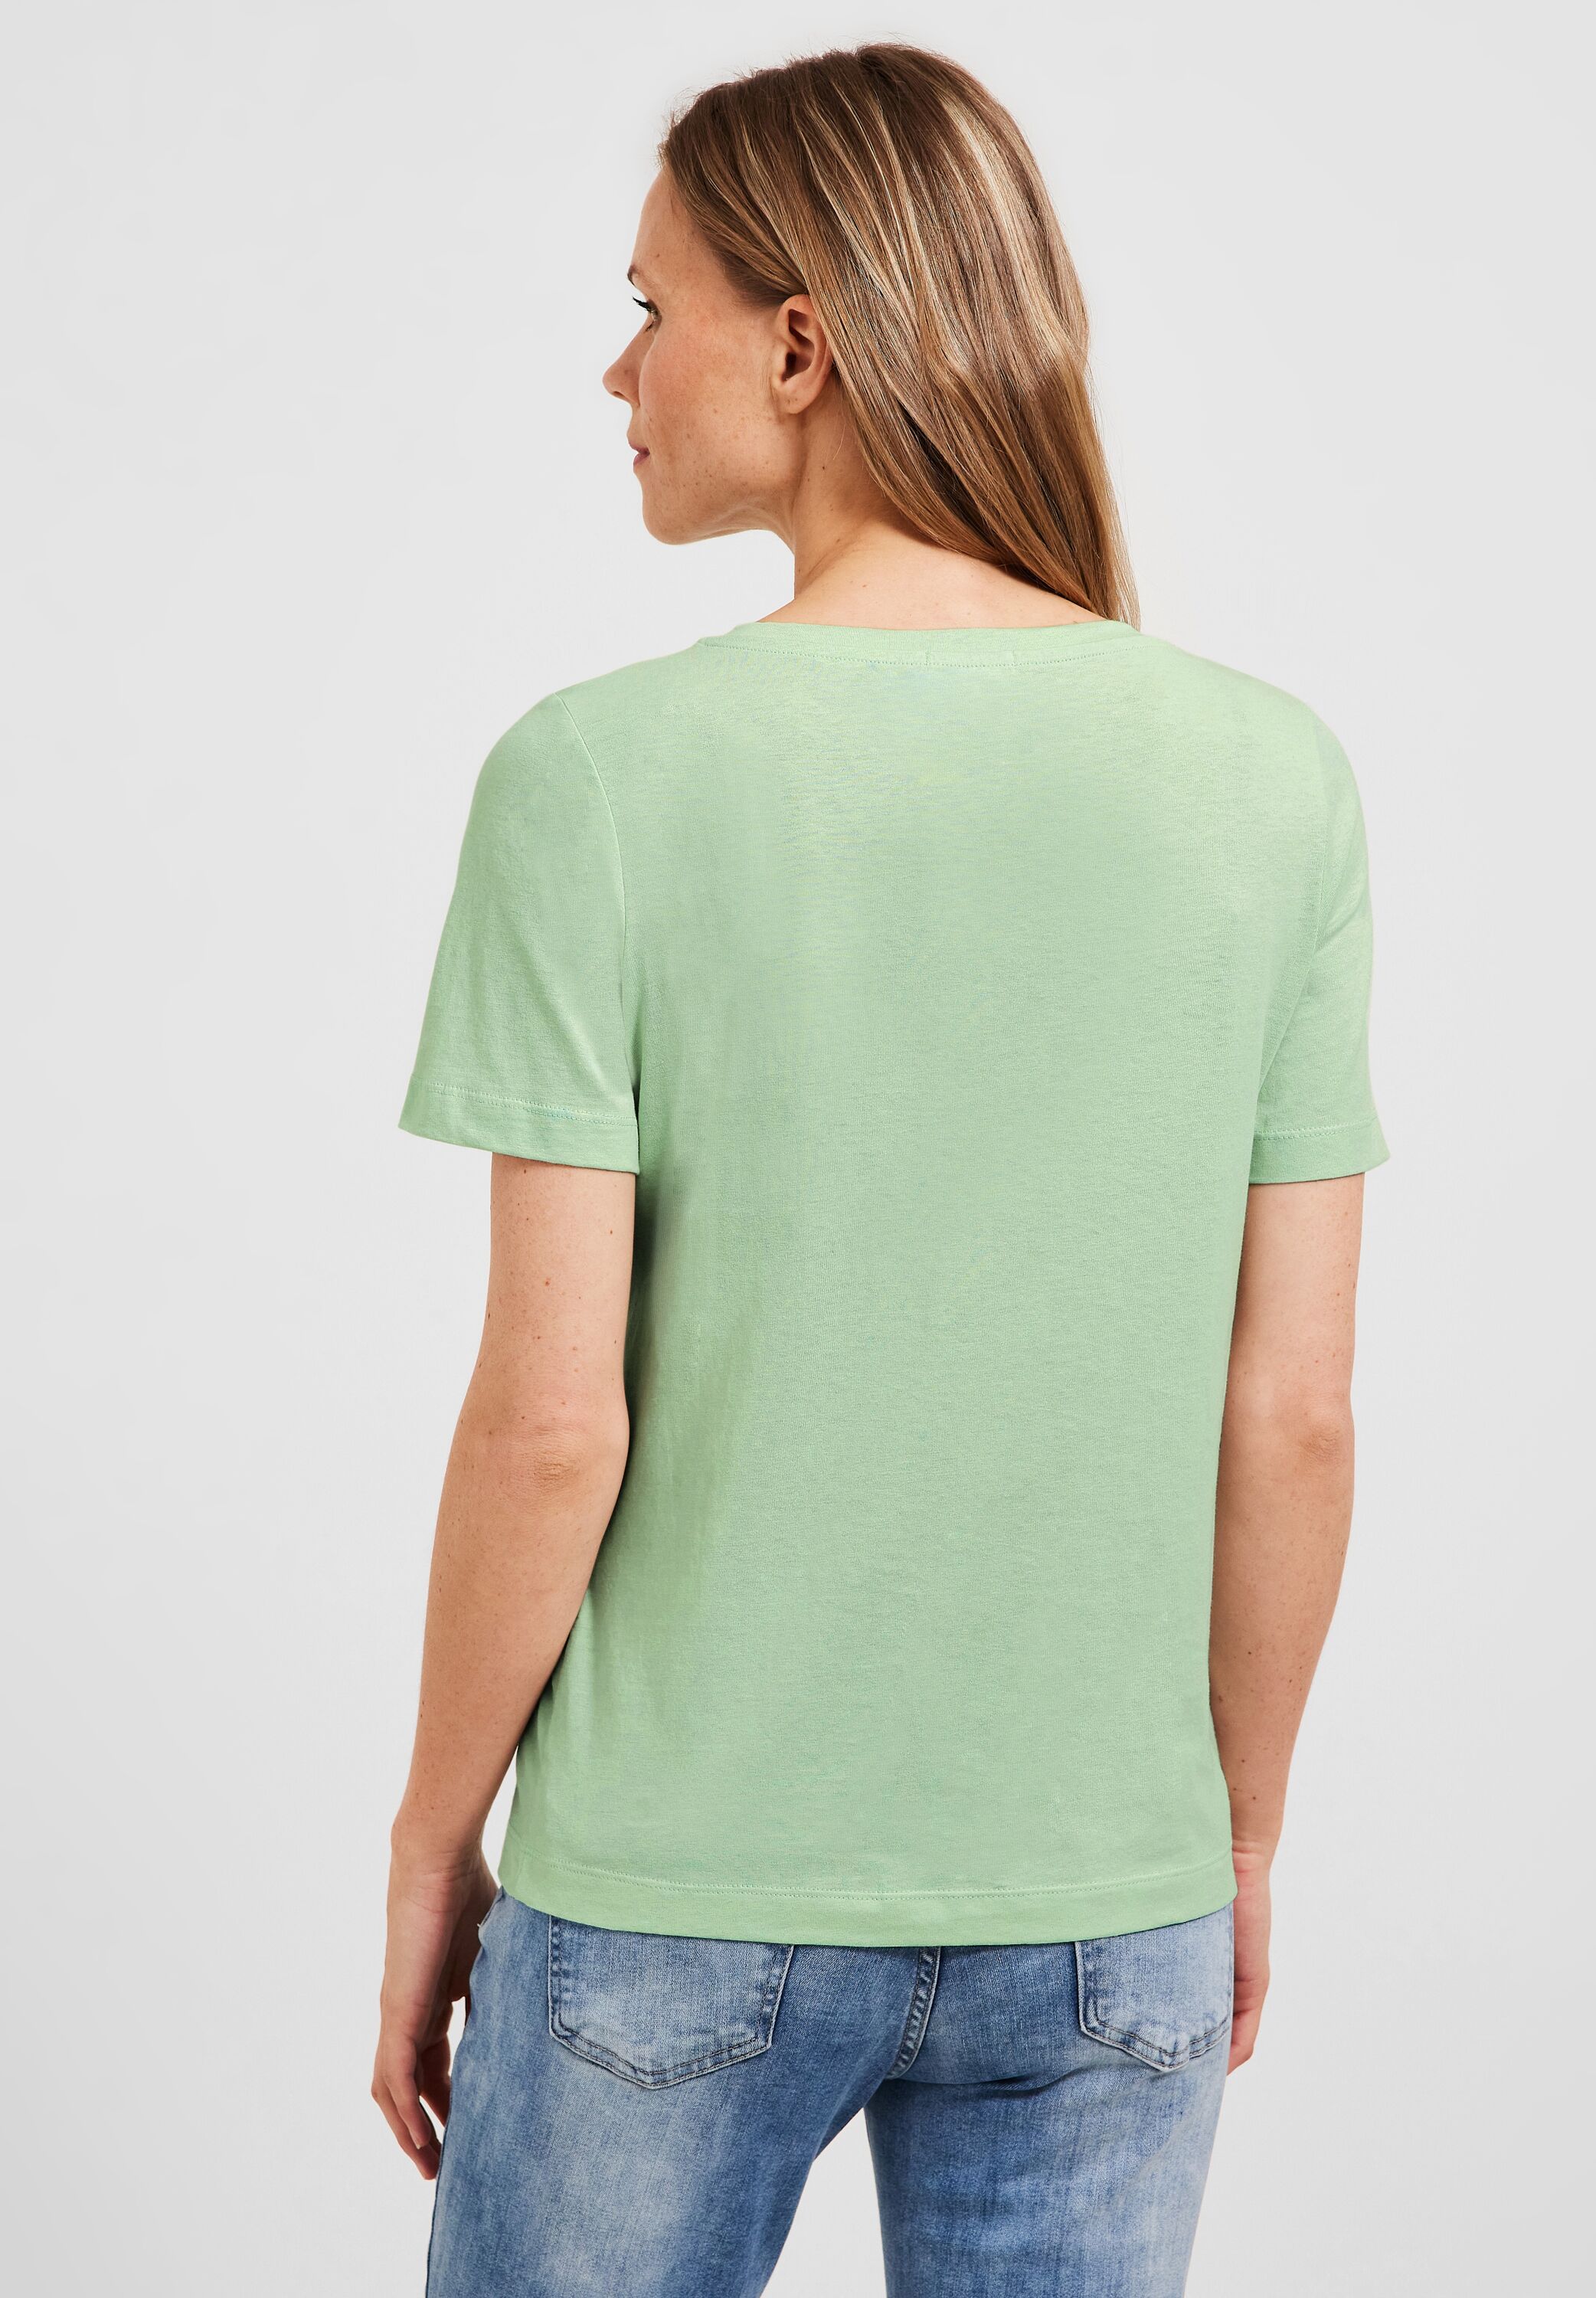 CECIL T-Shirt in Fresh Salvia Green im SALE reduziert B320051-24851 -  CONCEPT Mode